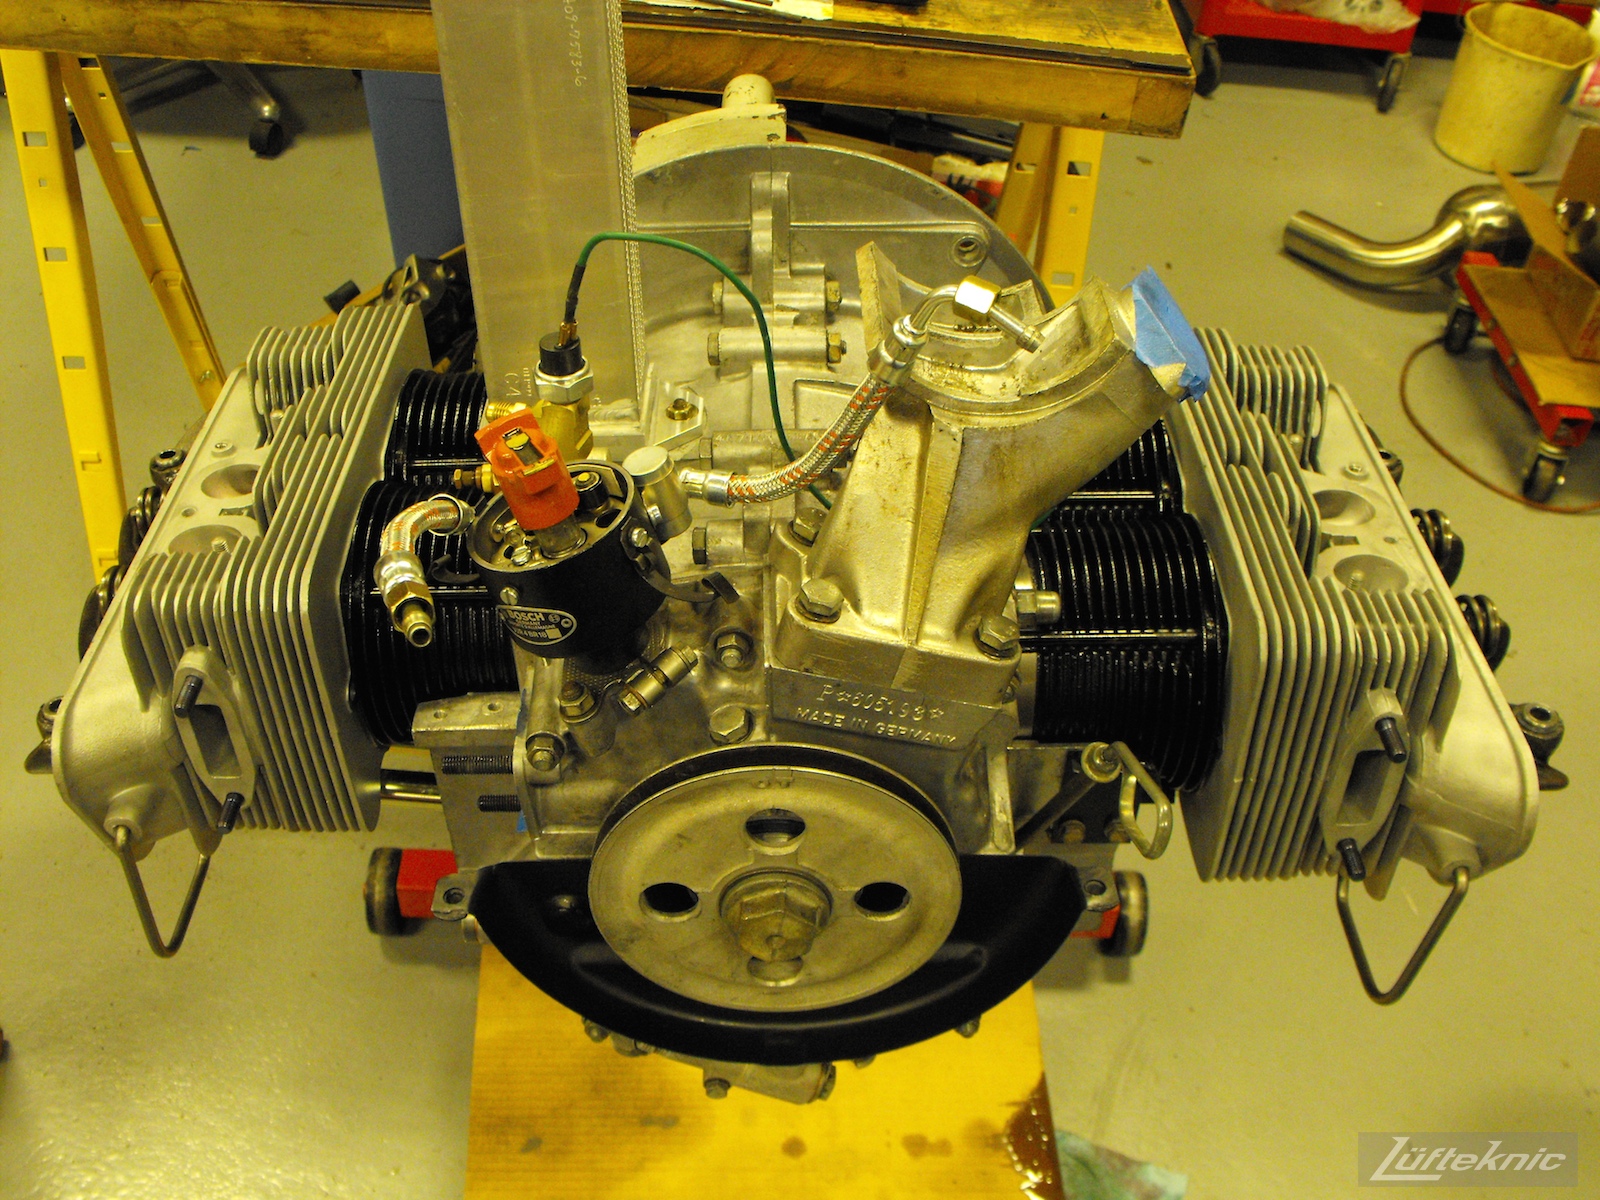 Engine assembly for a 1961 Porsche 356B Roadster restoration.